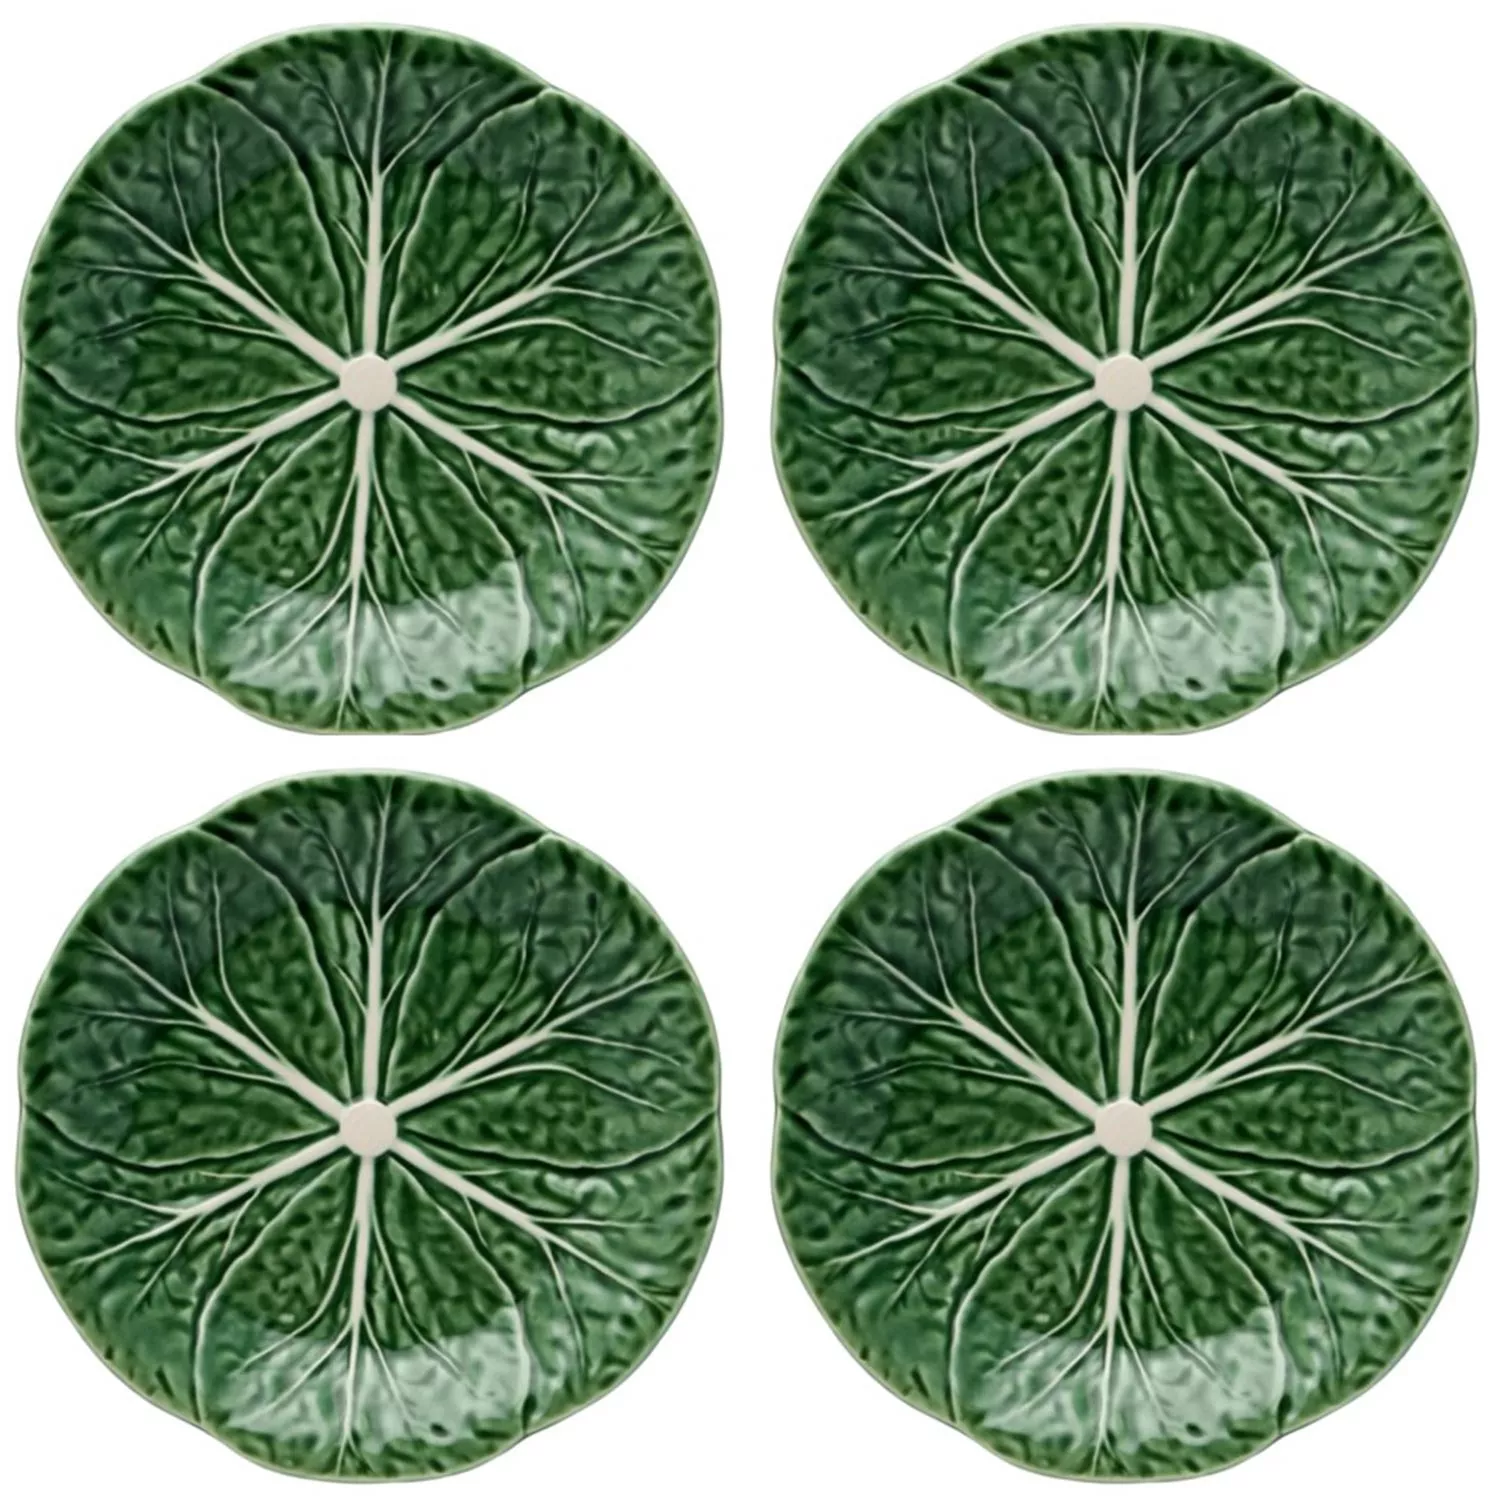 Bordallo Pinheiro Cabbage Green Dessert Plates, Set of 4